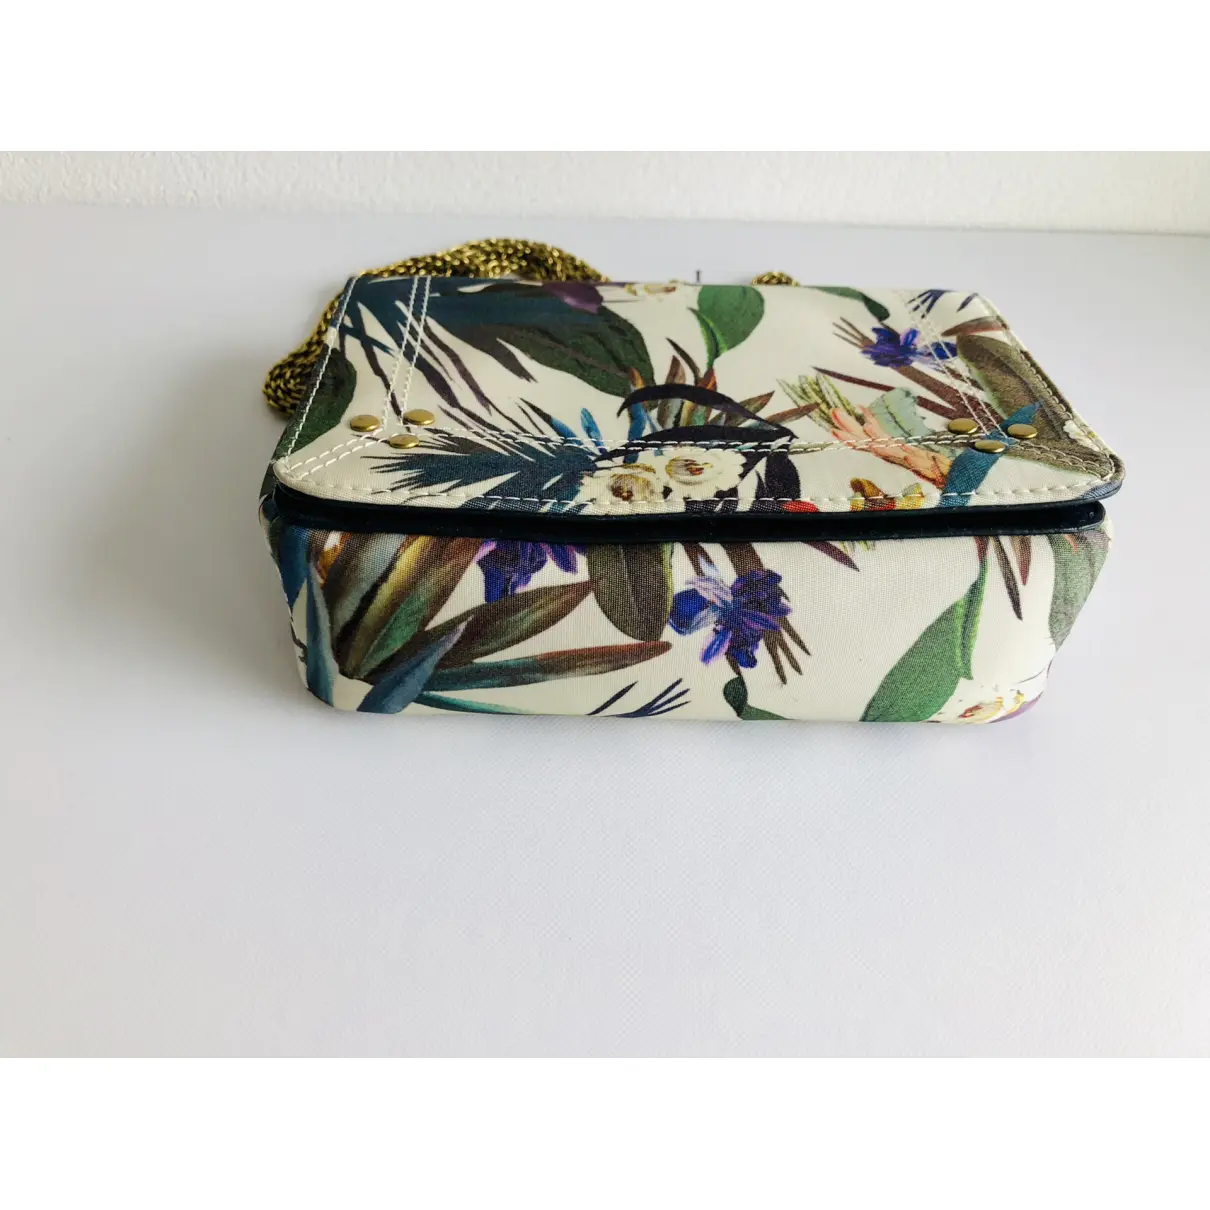 Buy Jerome Dreyfuss Eliot leather handbag online